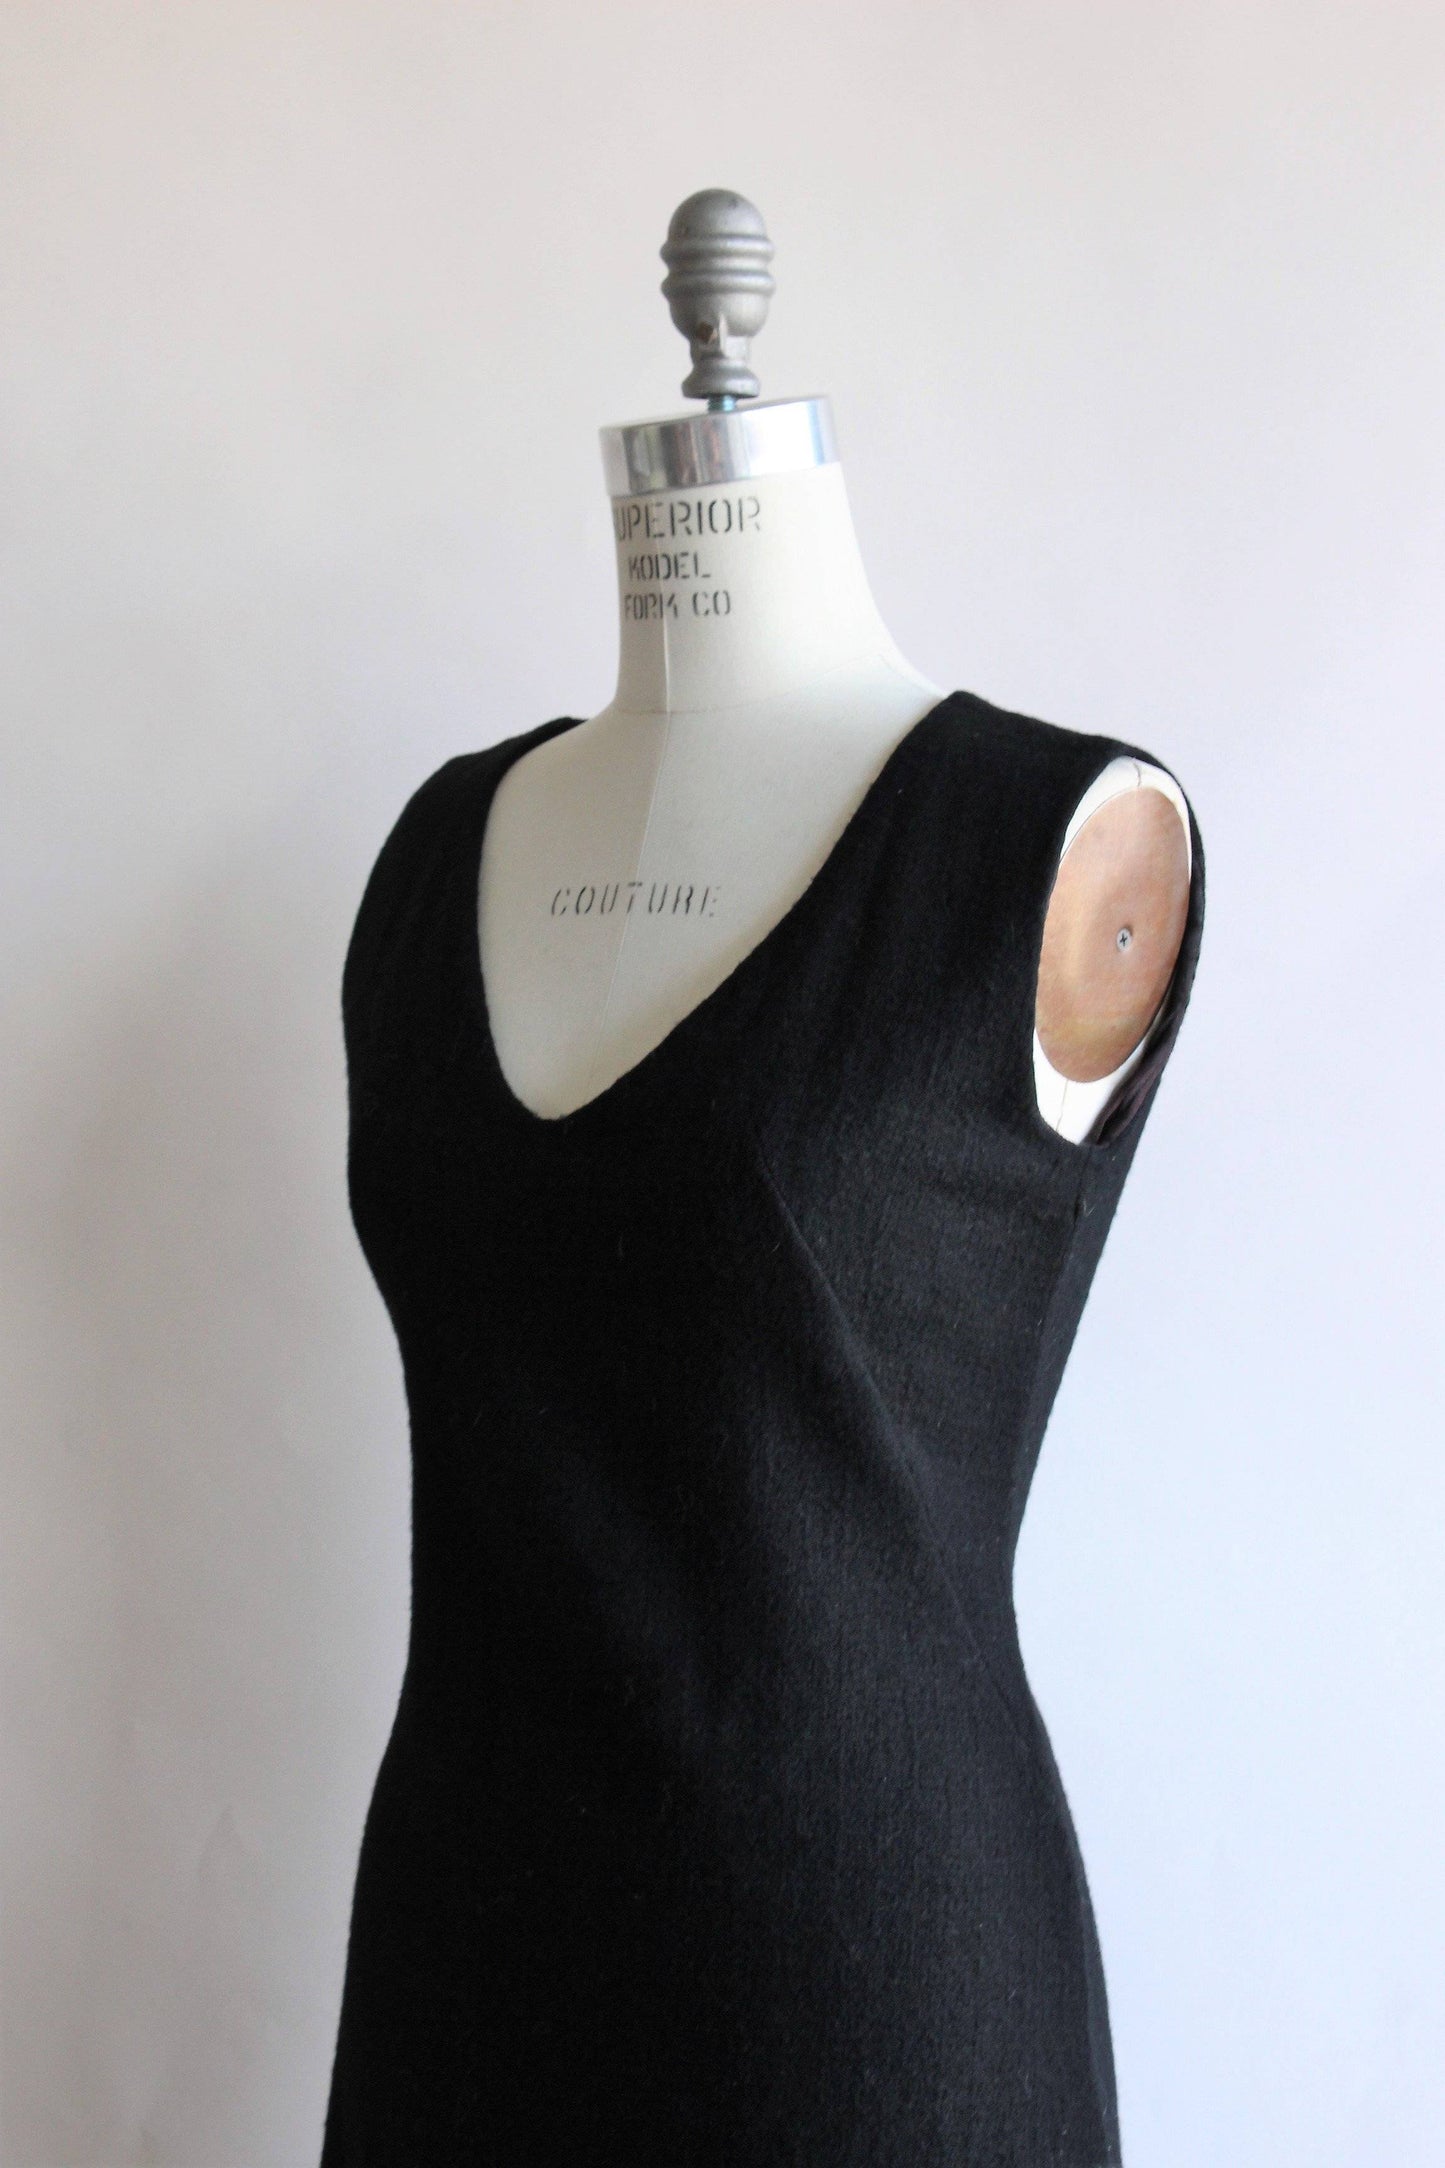 Vintage 1960s Black Wool Mini Dress-The Black Velvet Emporium-1960s,black,dress,mini,minidress,mod,Vintage,Vintage Clothing,wool